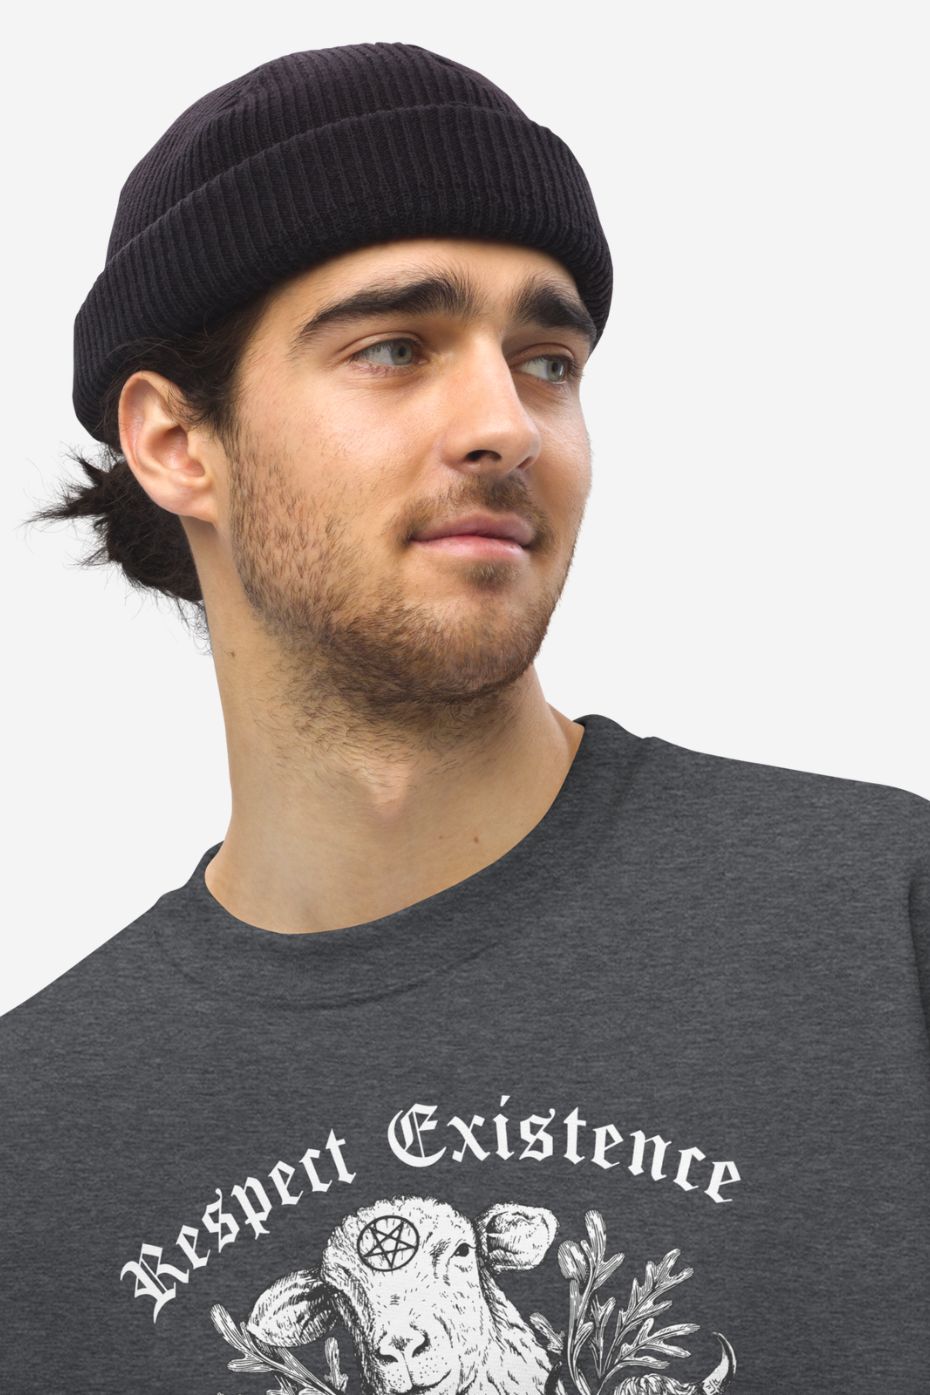 Respect Existence - Unisex Sweatshirt